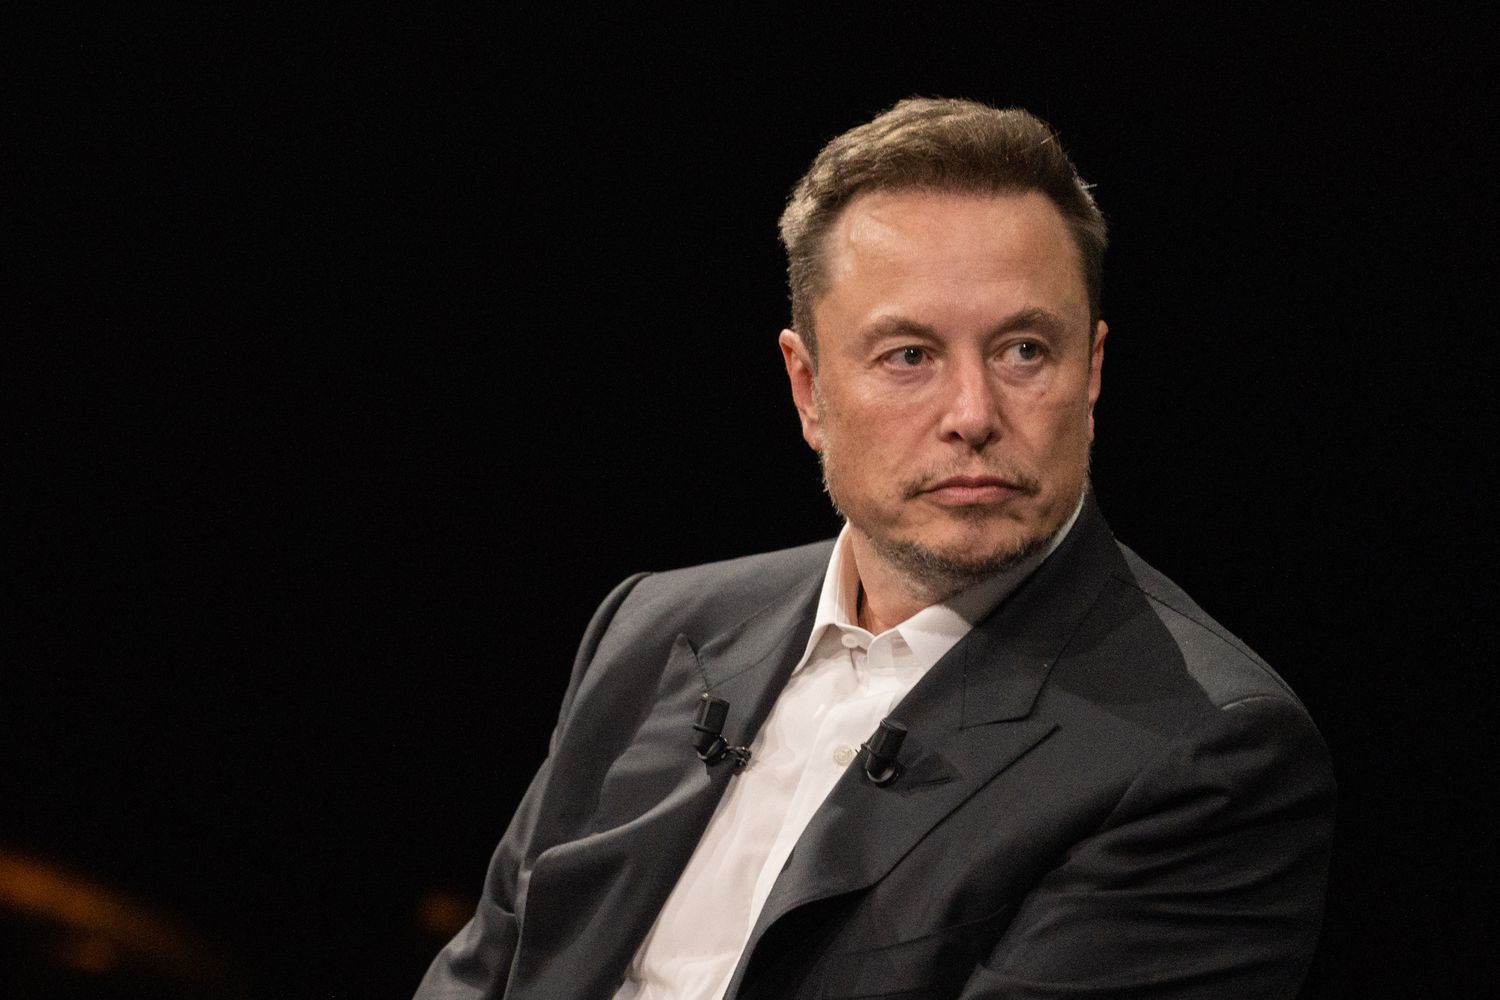 Elon Musk postpones India visit, citing Tesla obligations